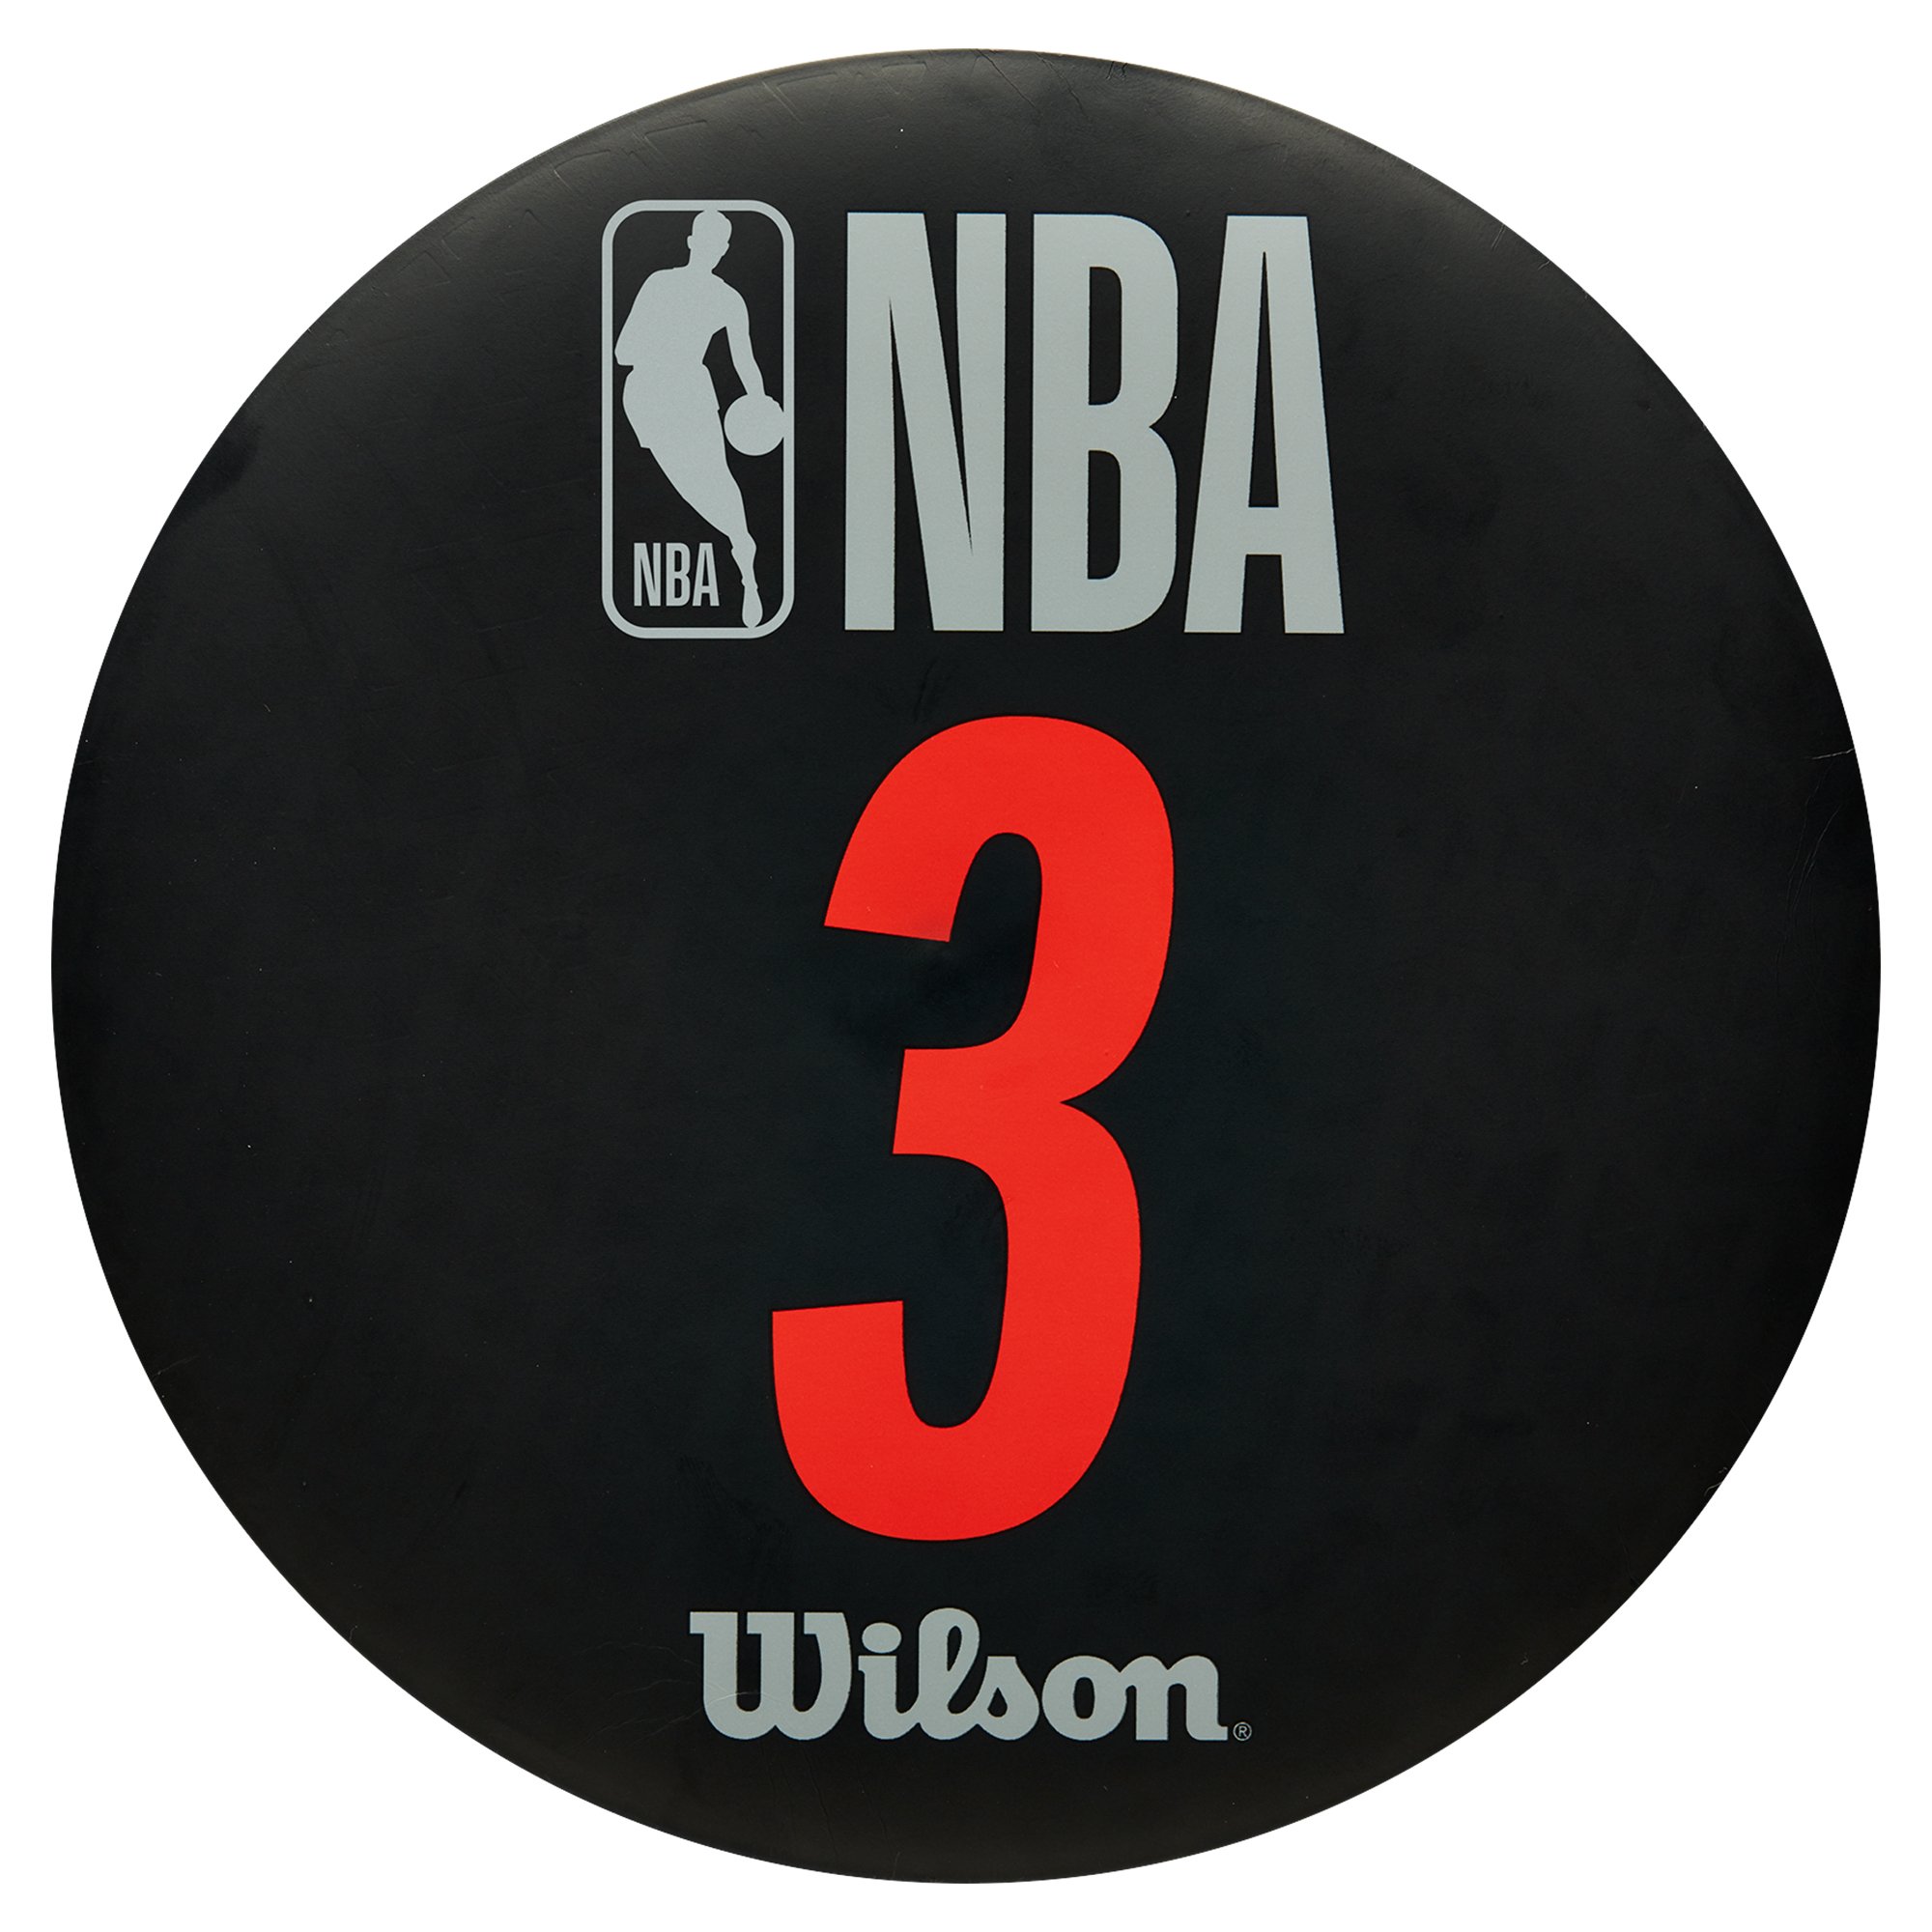 Wilson NBA DRV Training Markers